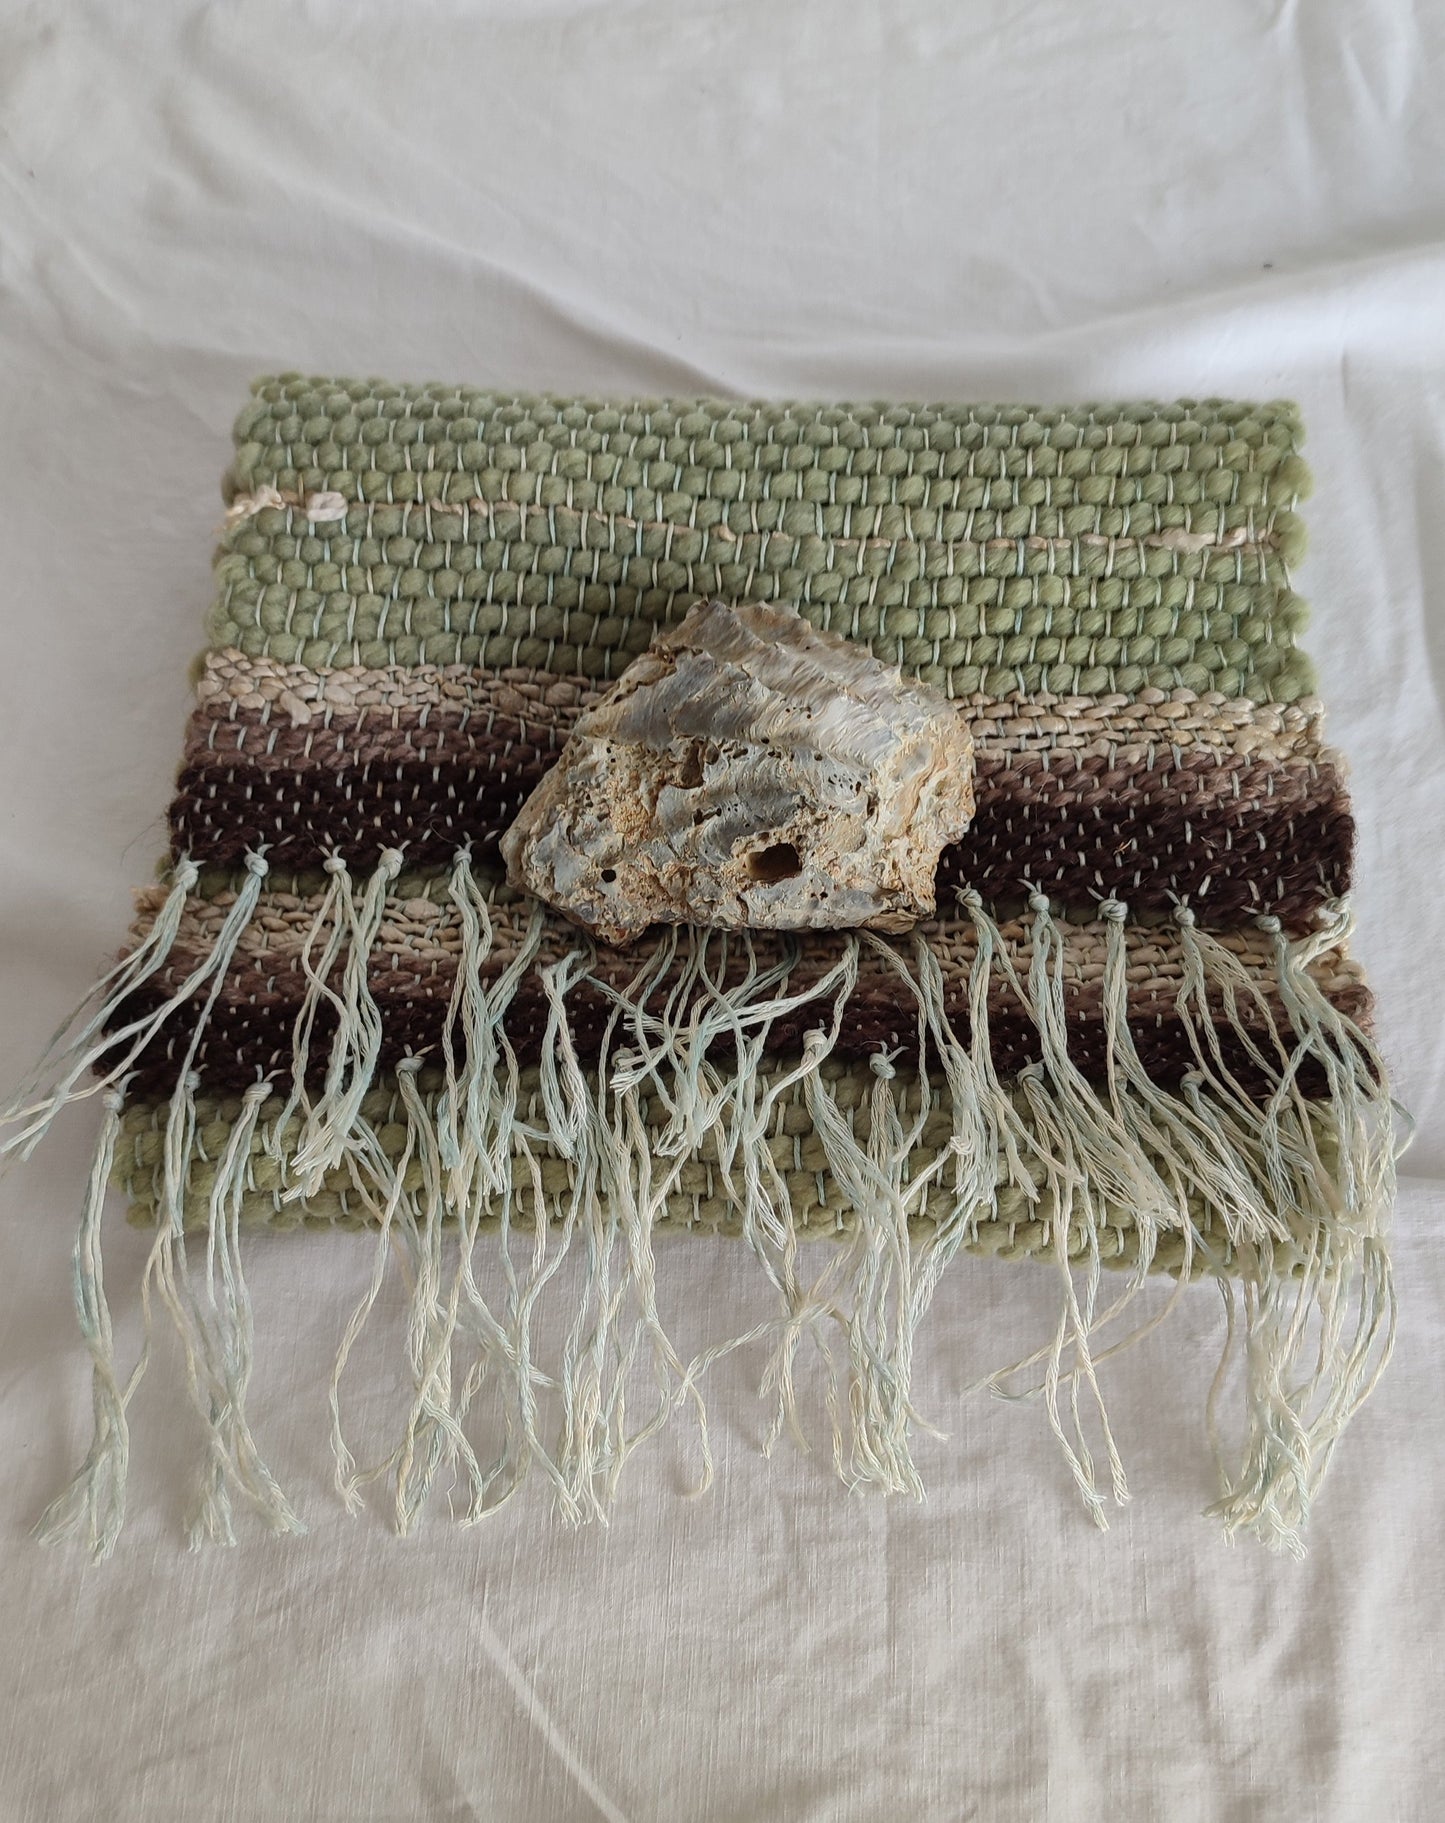 Wool and hemp green handwoven table runner - Runner da tavola verde e marrone, tessuto su telaio a mano, lana e canapa.